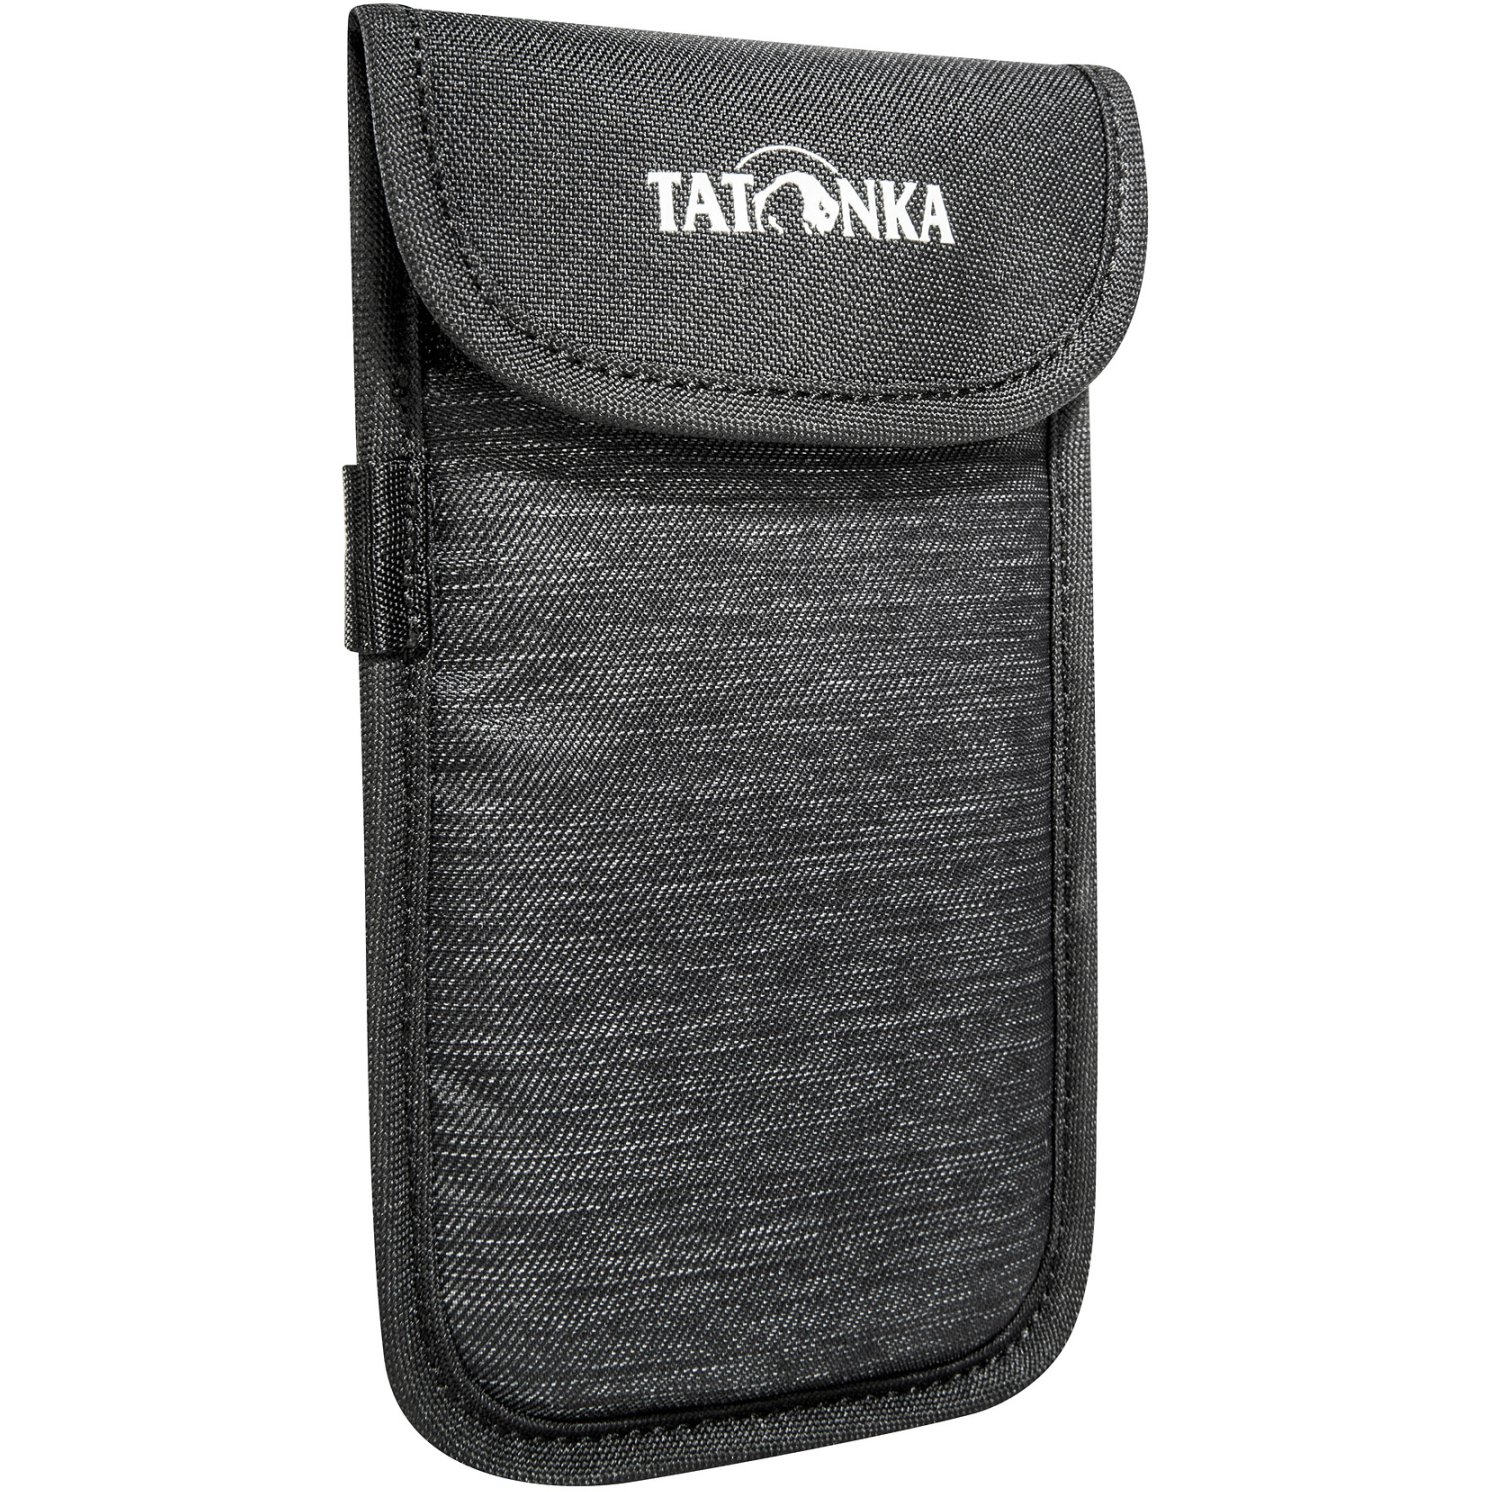 Productfoto van Tatonka Smartphone Case XL - off black